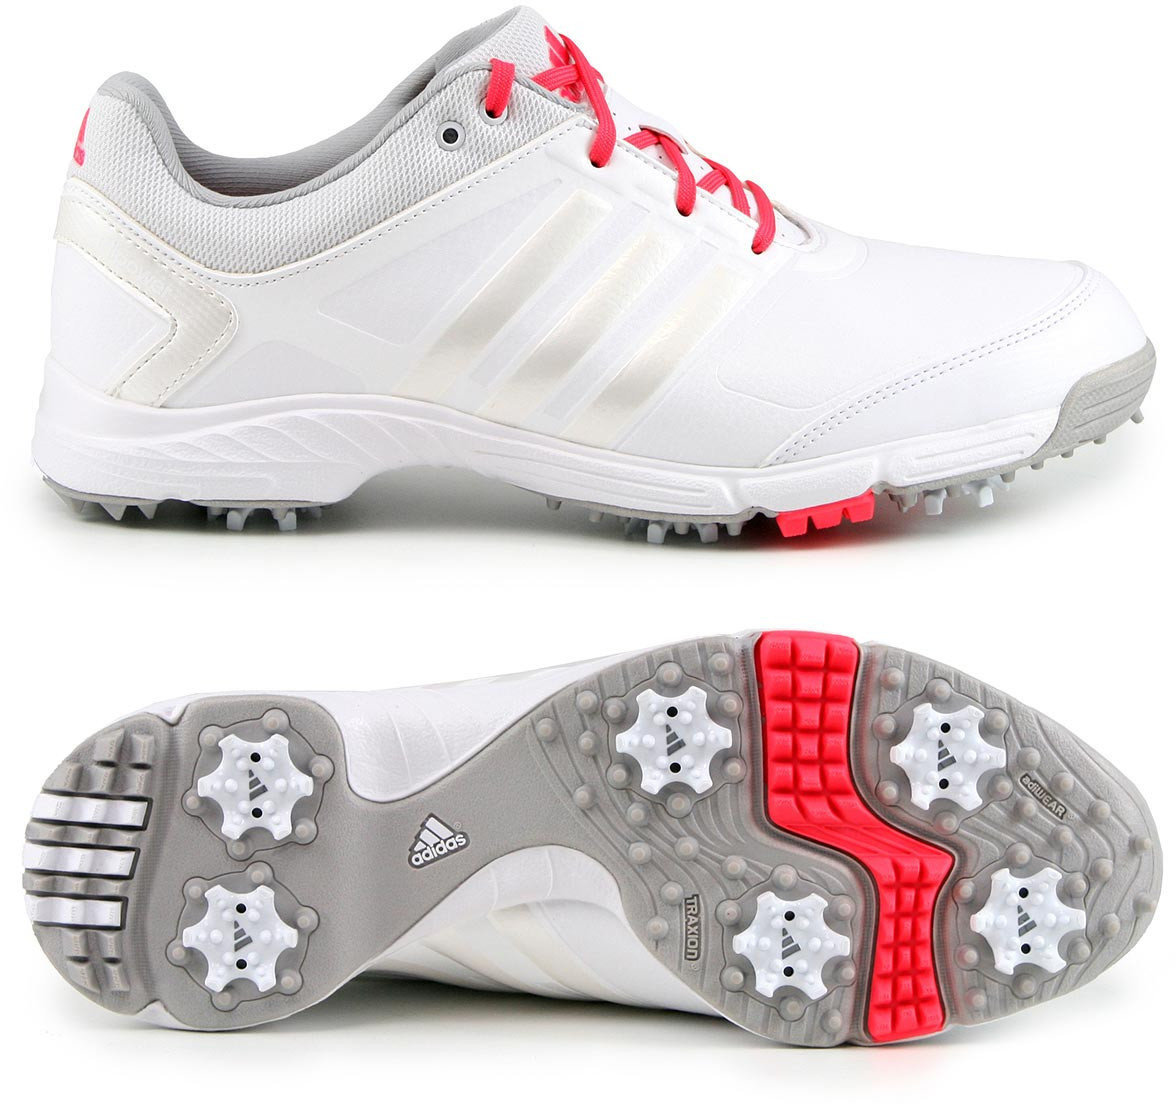 Damen Golfschuhe Adidas Adipower Tour Golfschuhe Herren White/Metallic/Shock Red UK 4